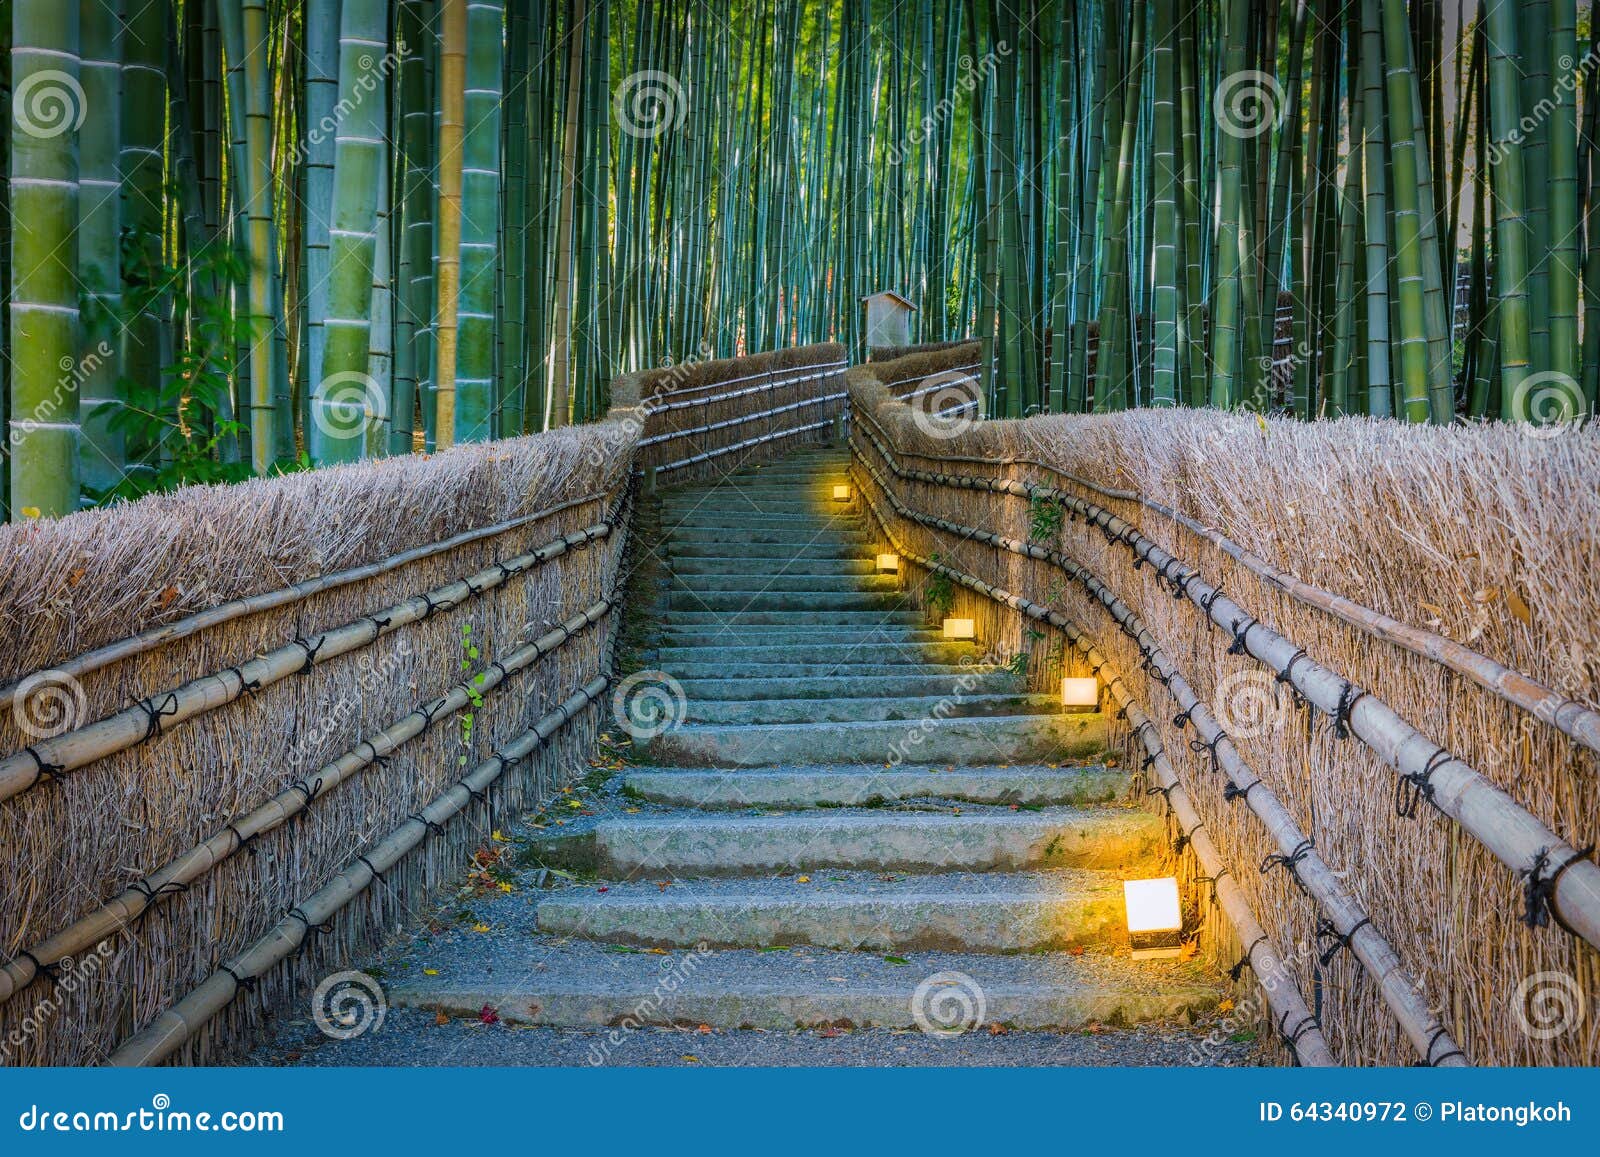 path to bamboo forest, arashiyama, kyoto